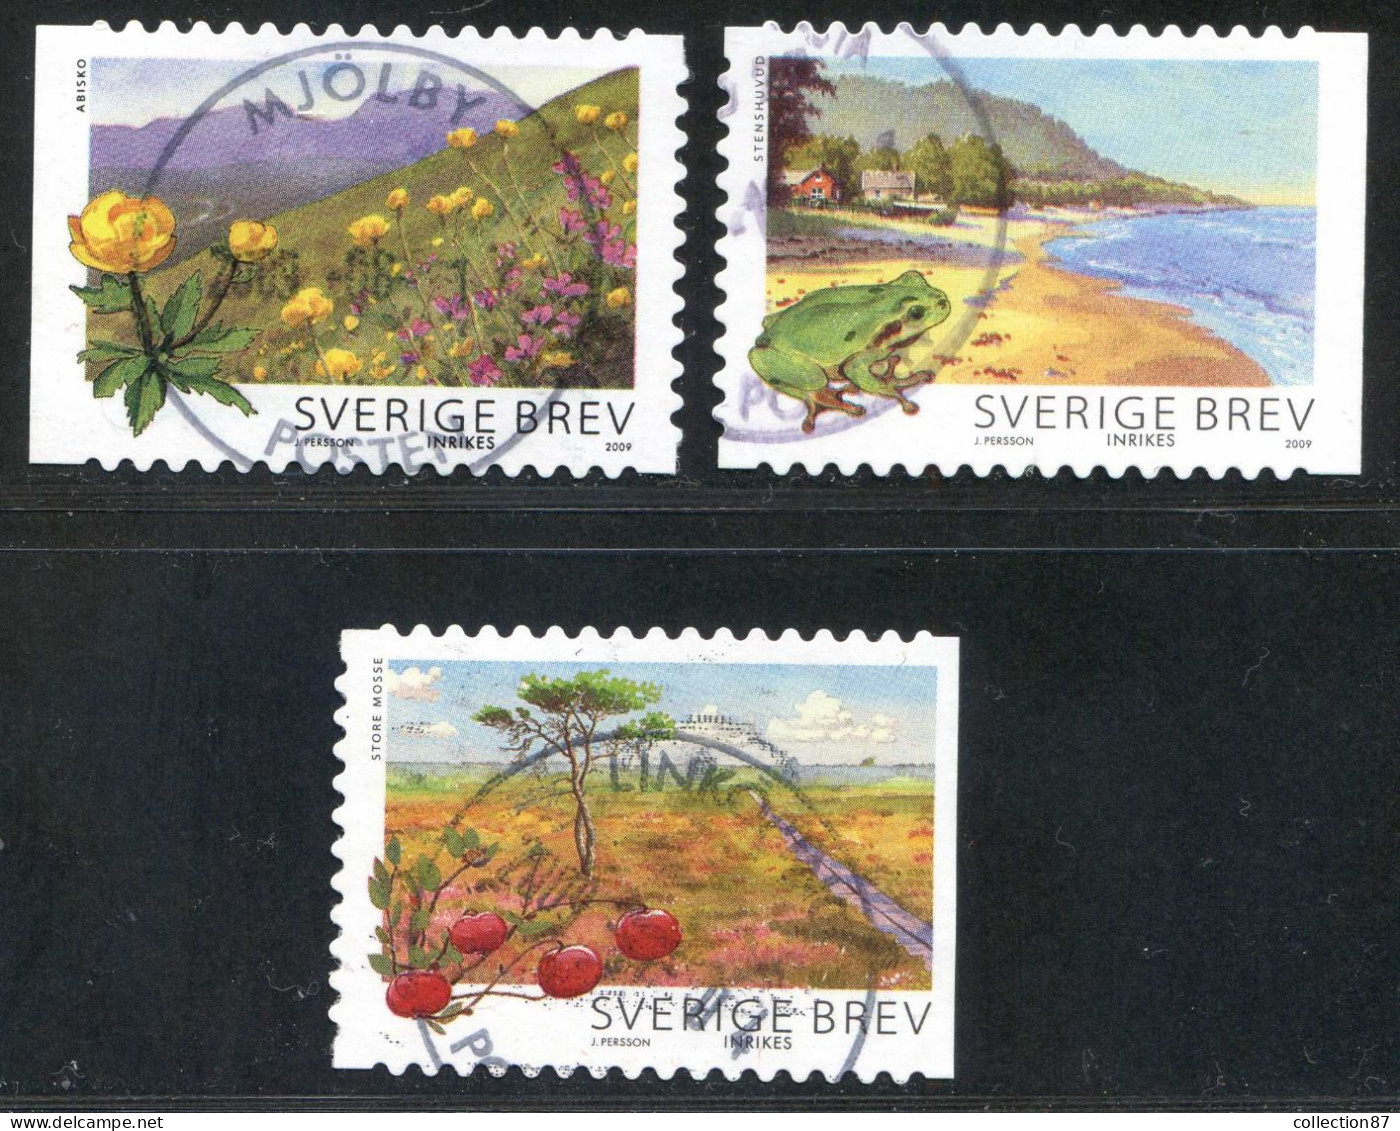 Réf 77 < SUEDE < Yvert N° 2689 + 2690 + 2692 Ø < Année 2009 Used < SWEDEN < Grenouille Parcs Nationaux - Used Stamps